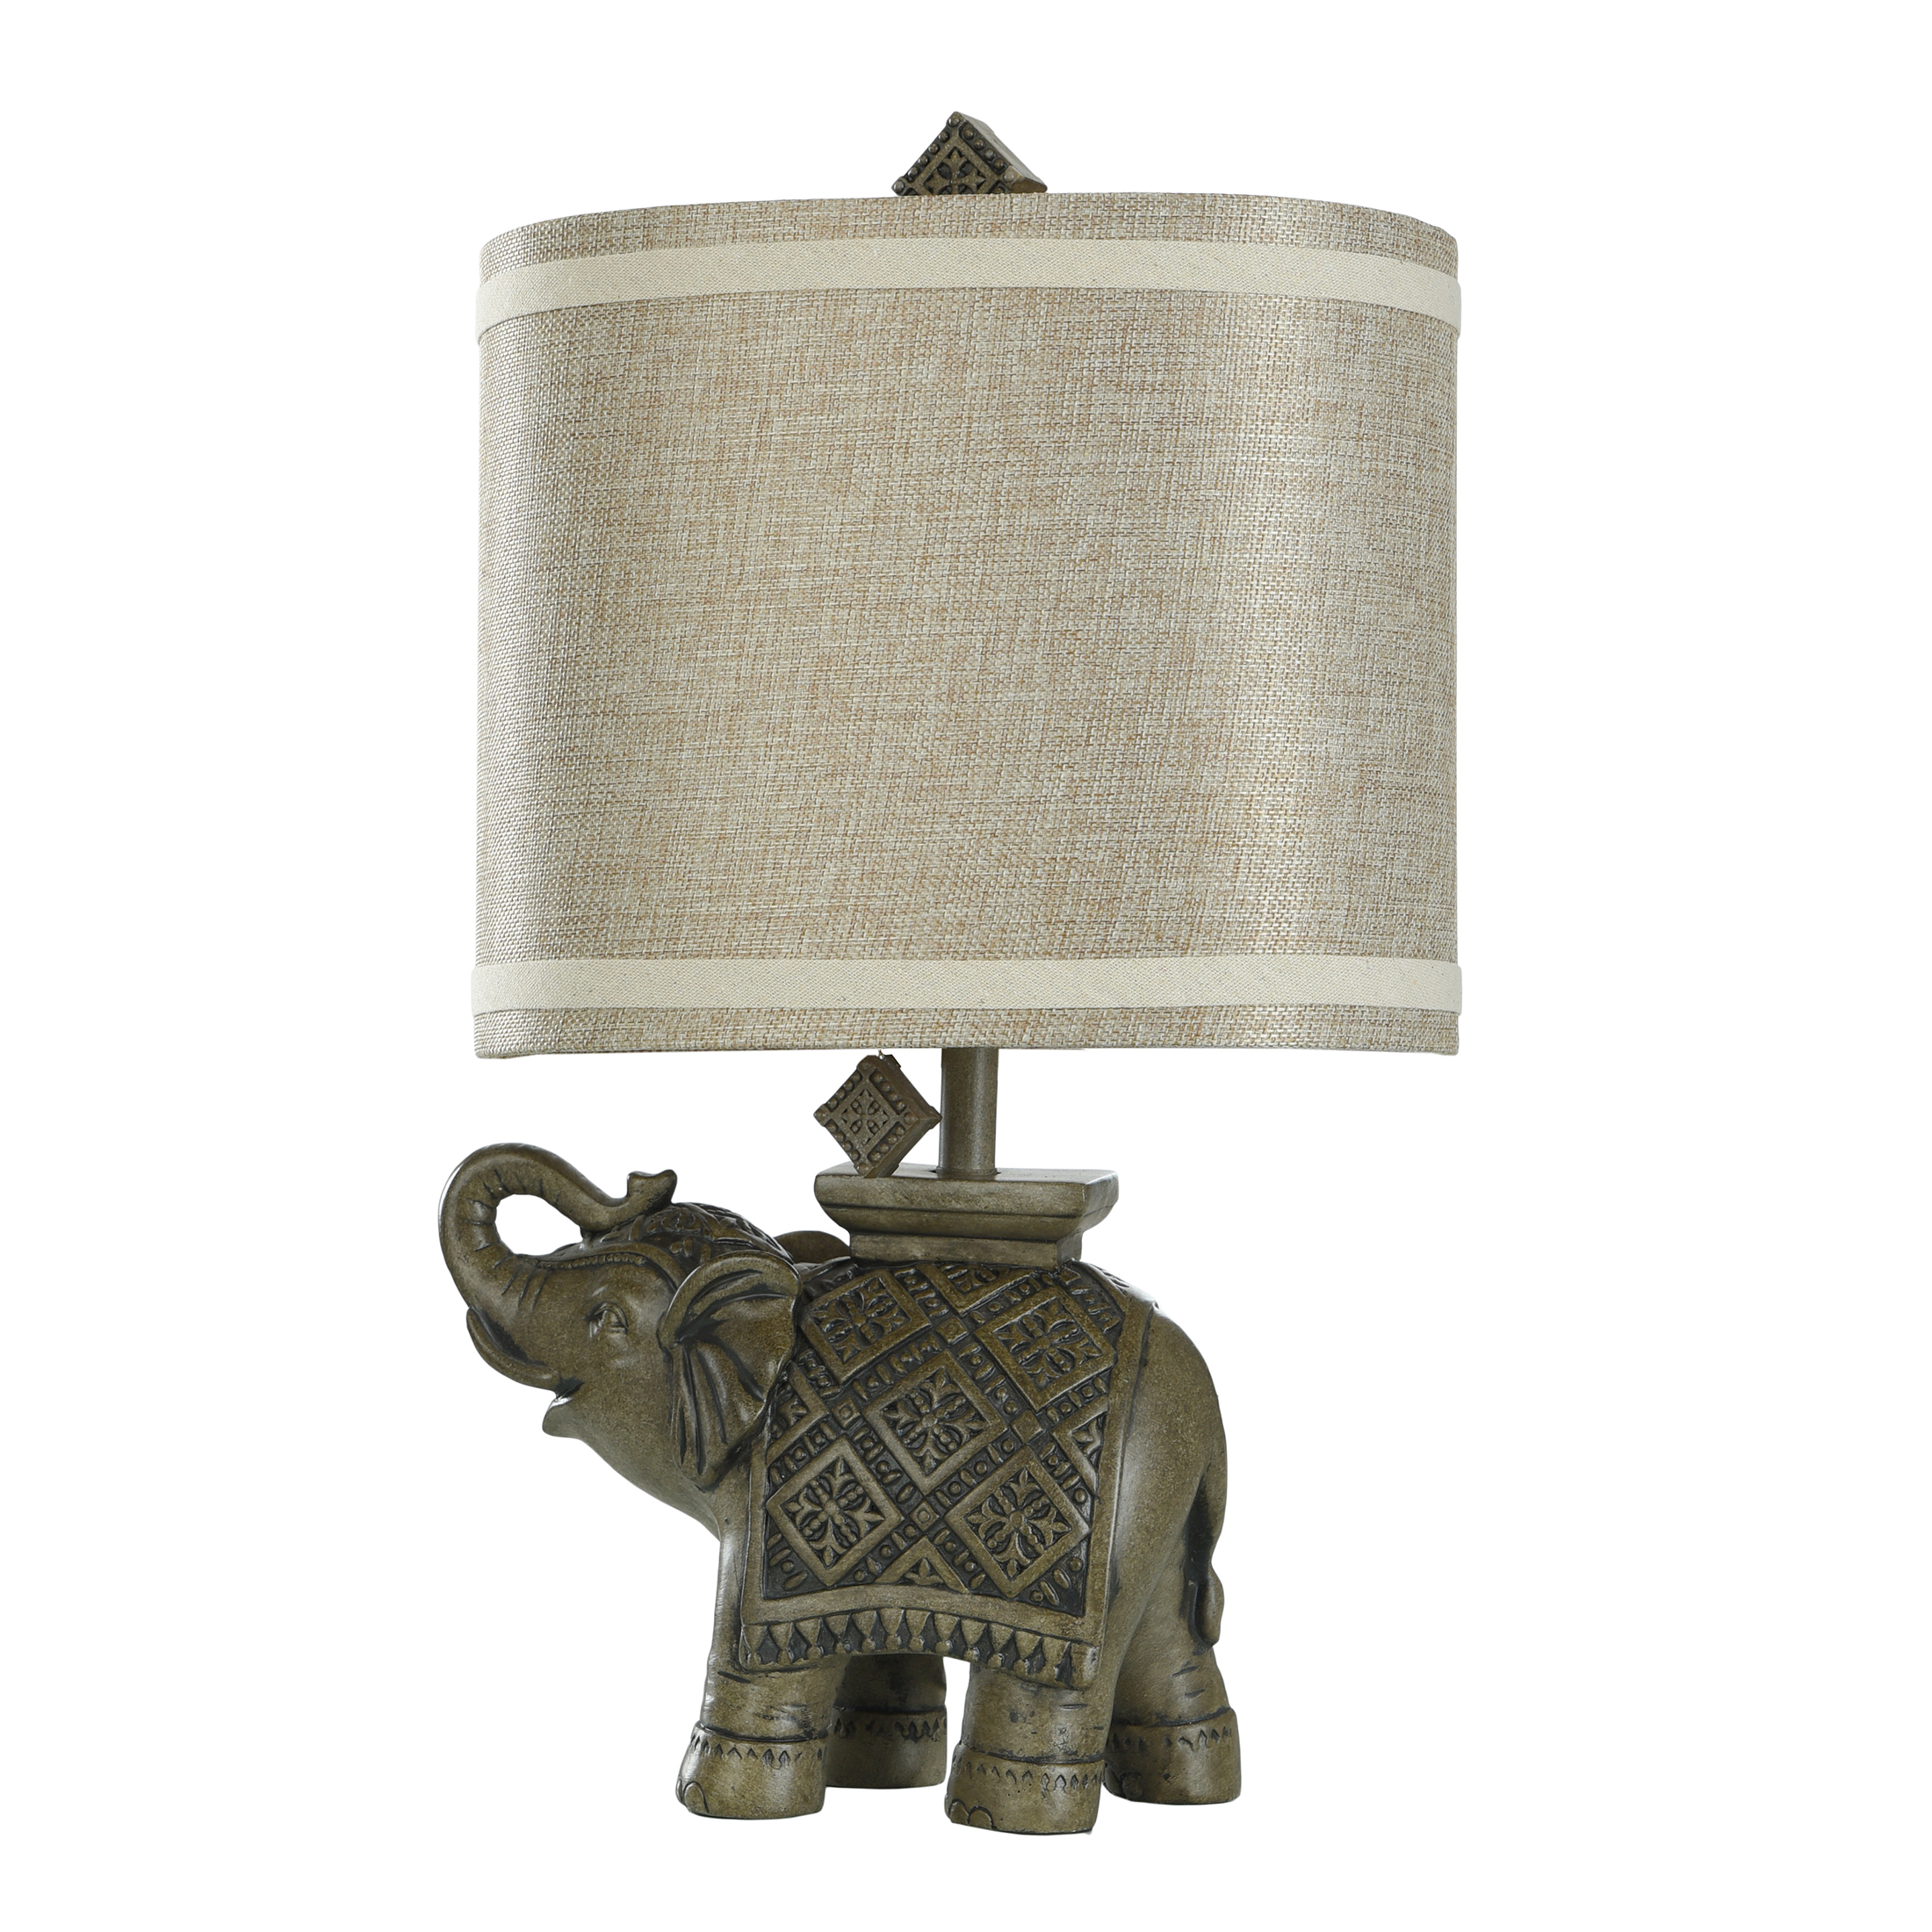 Better Homes & Gardens Elephant Table Lamp, Gray - image 3 of 15